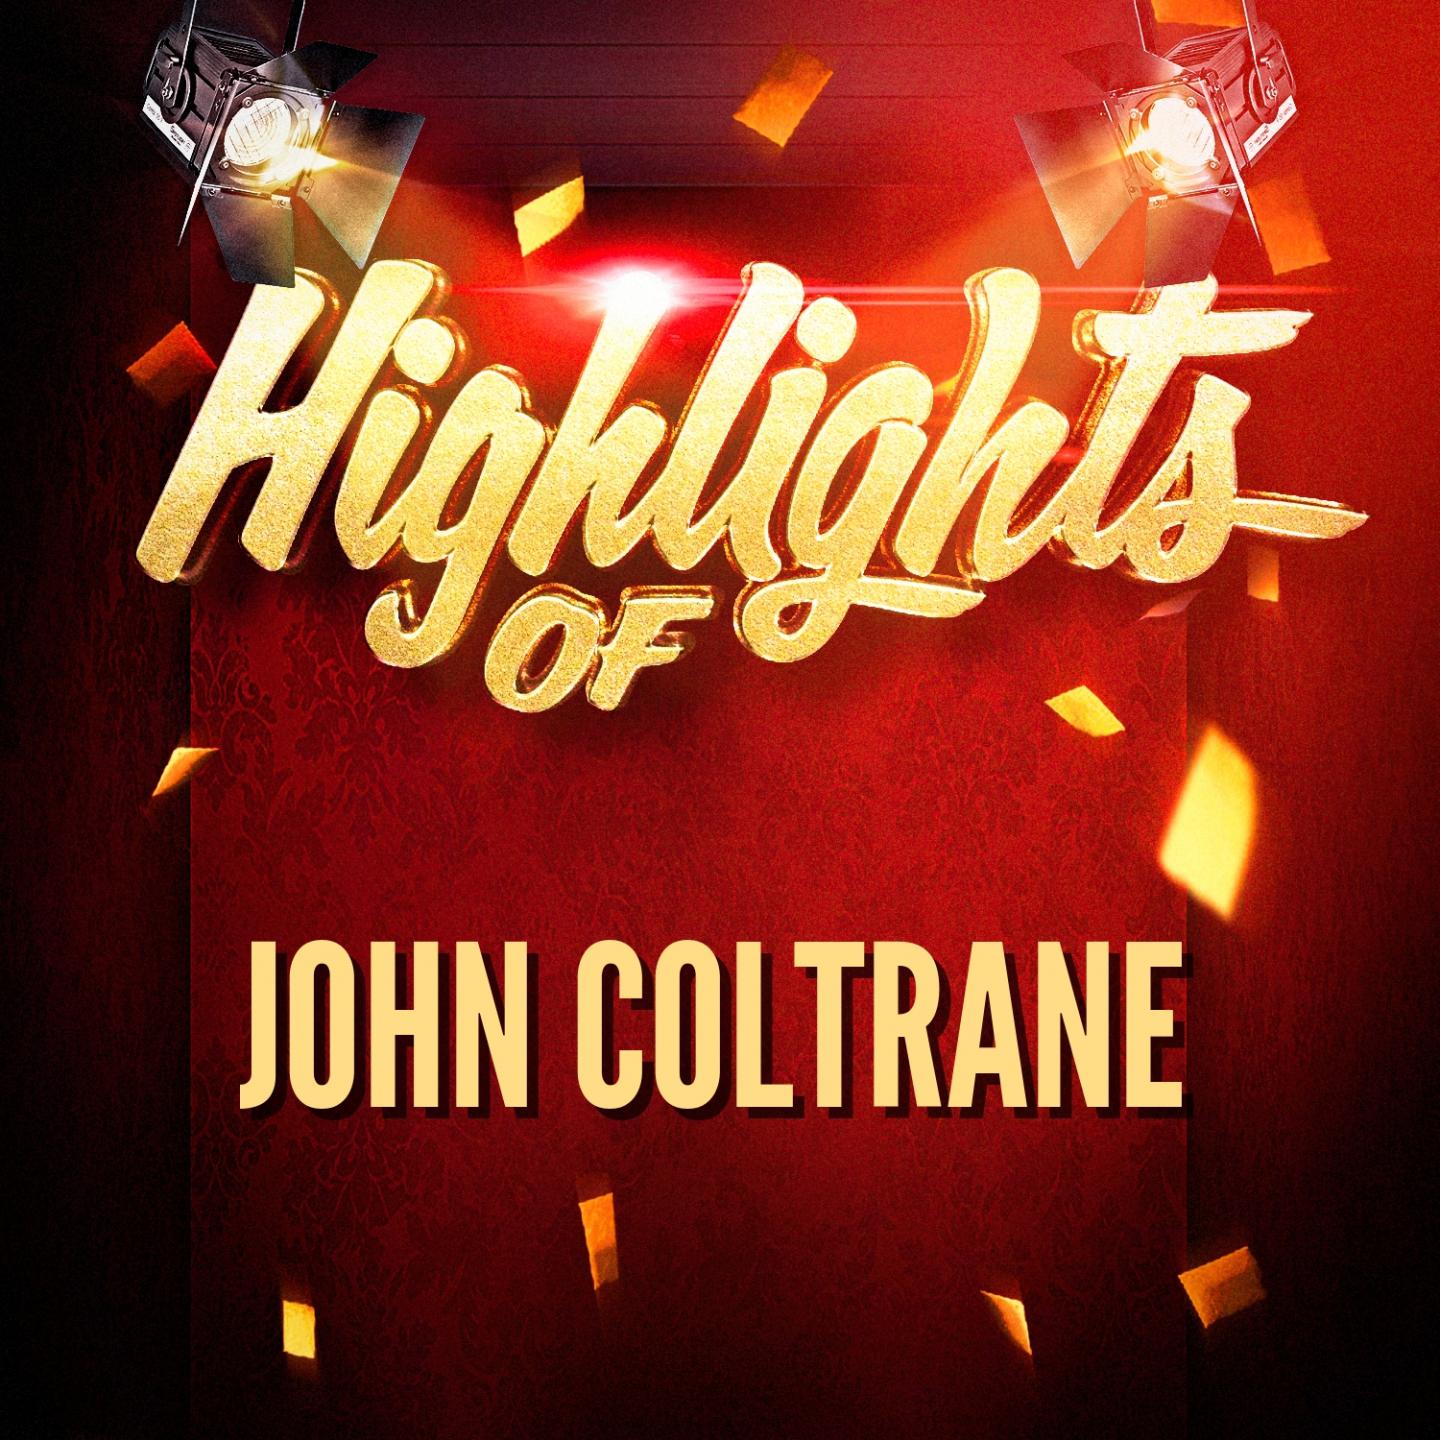 Highlights of John Coltrane